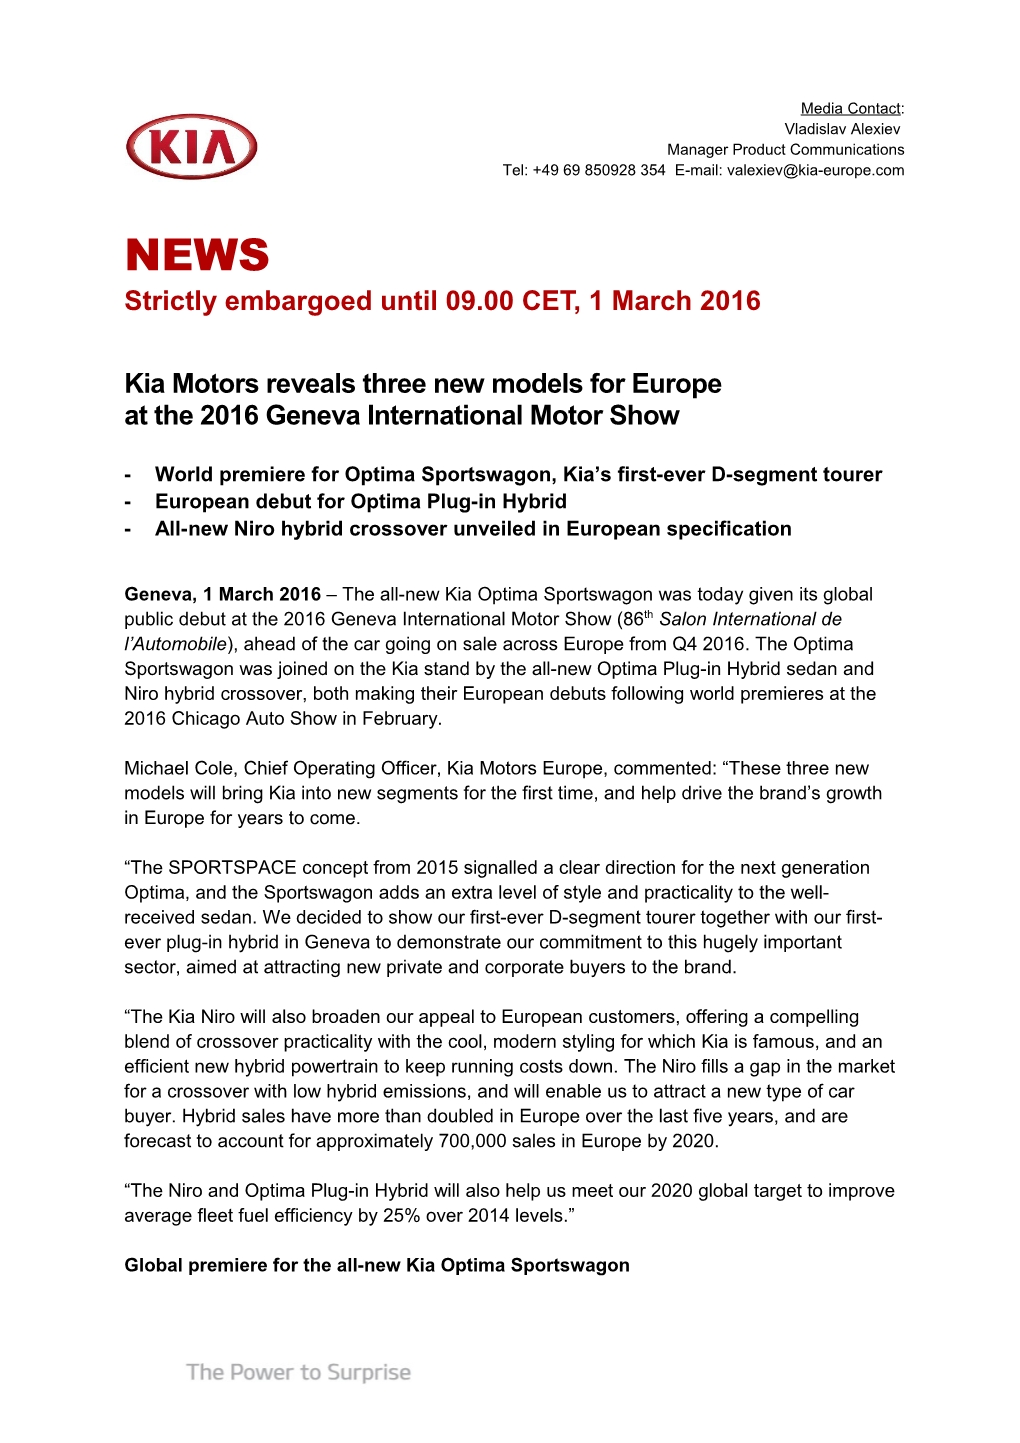 Kia Motors Reveals Three New Models for Europe